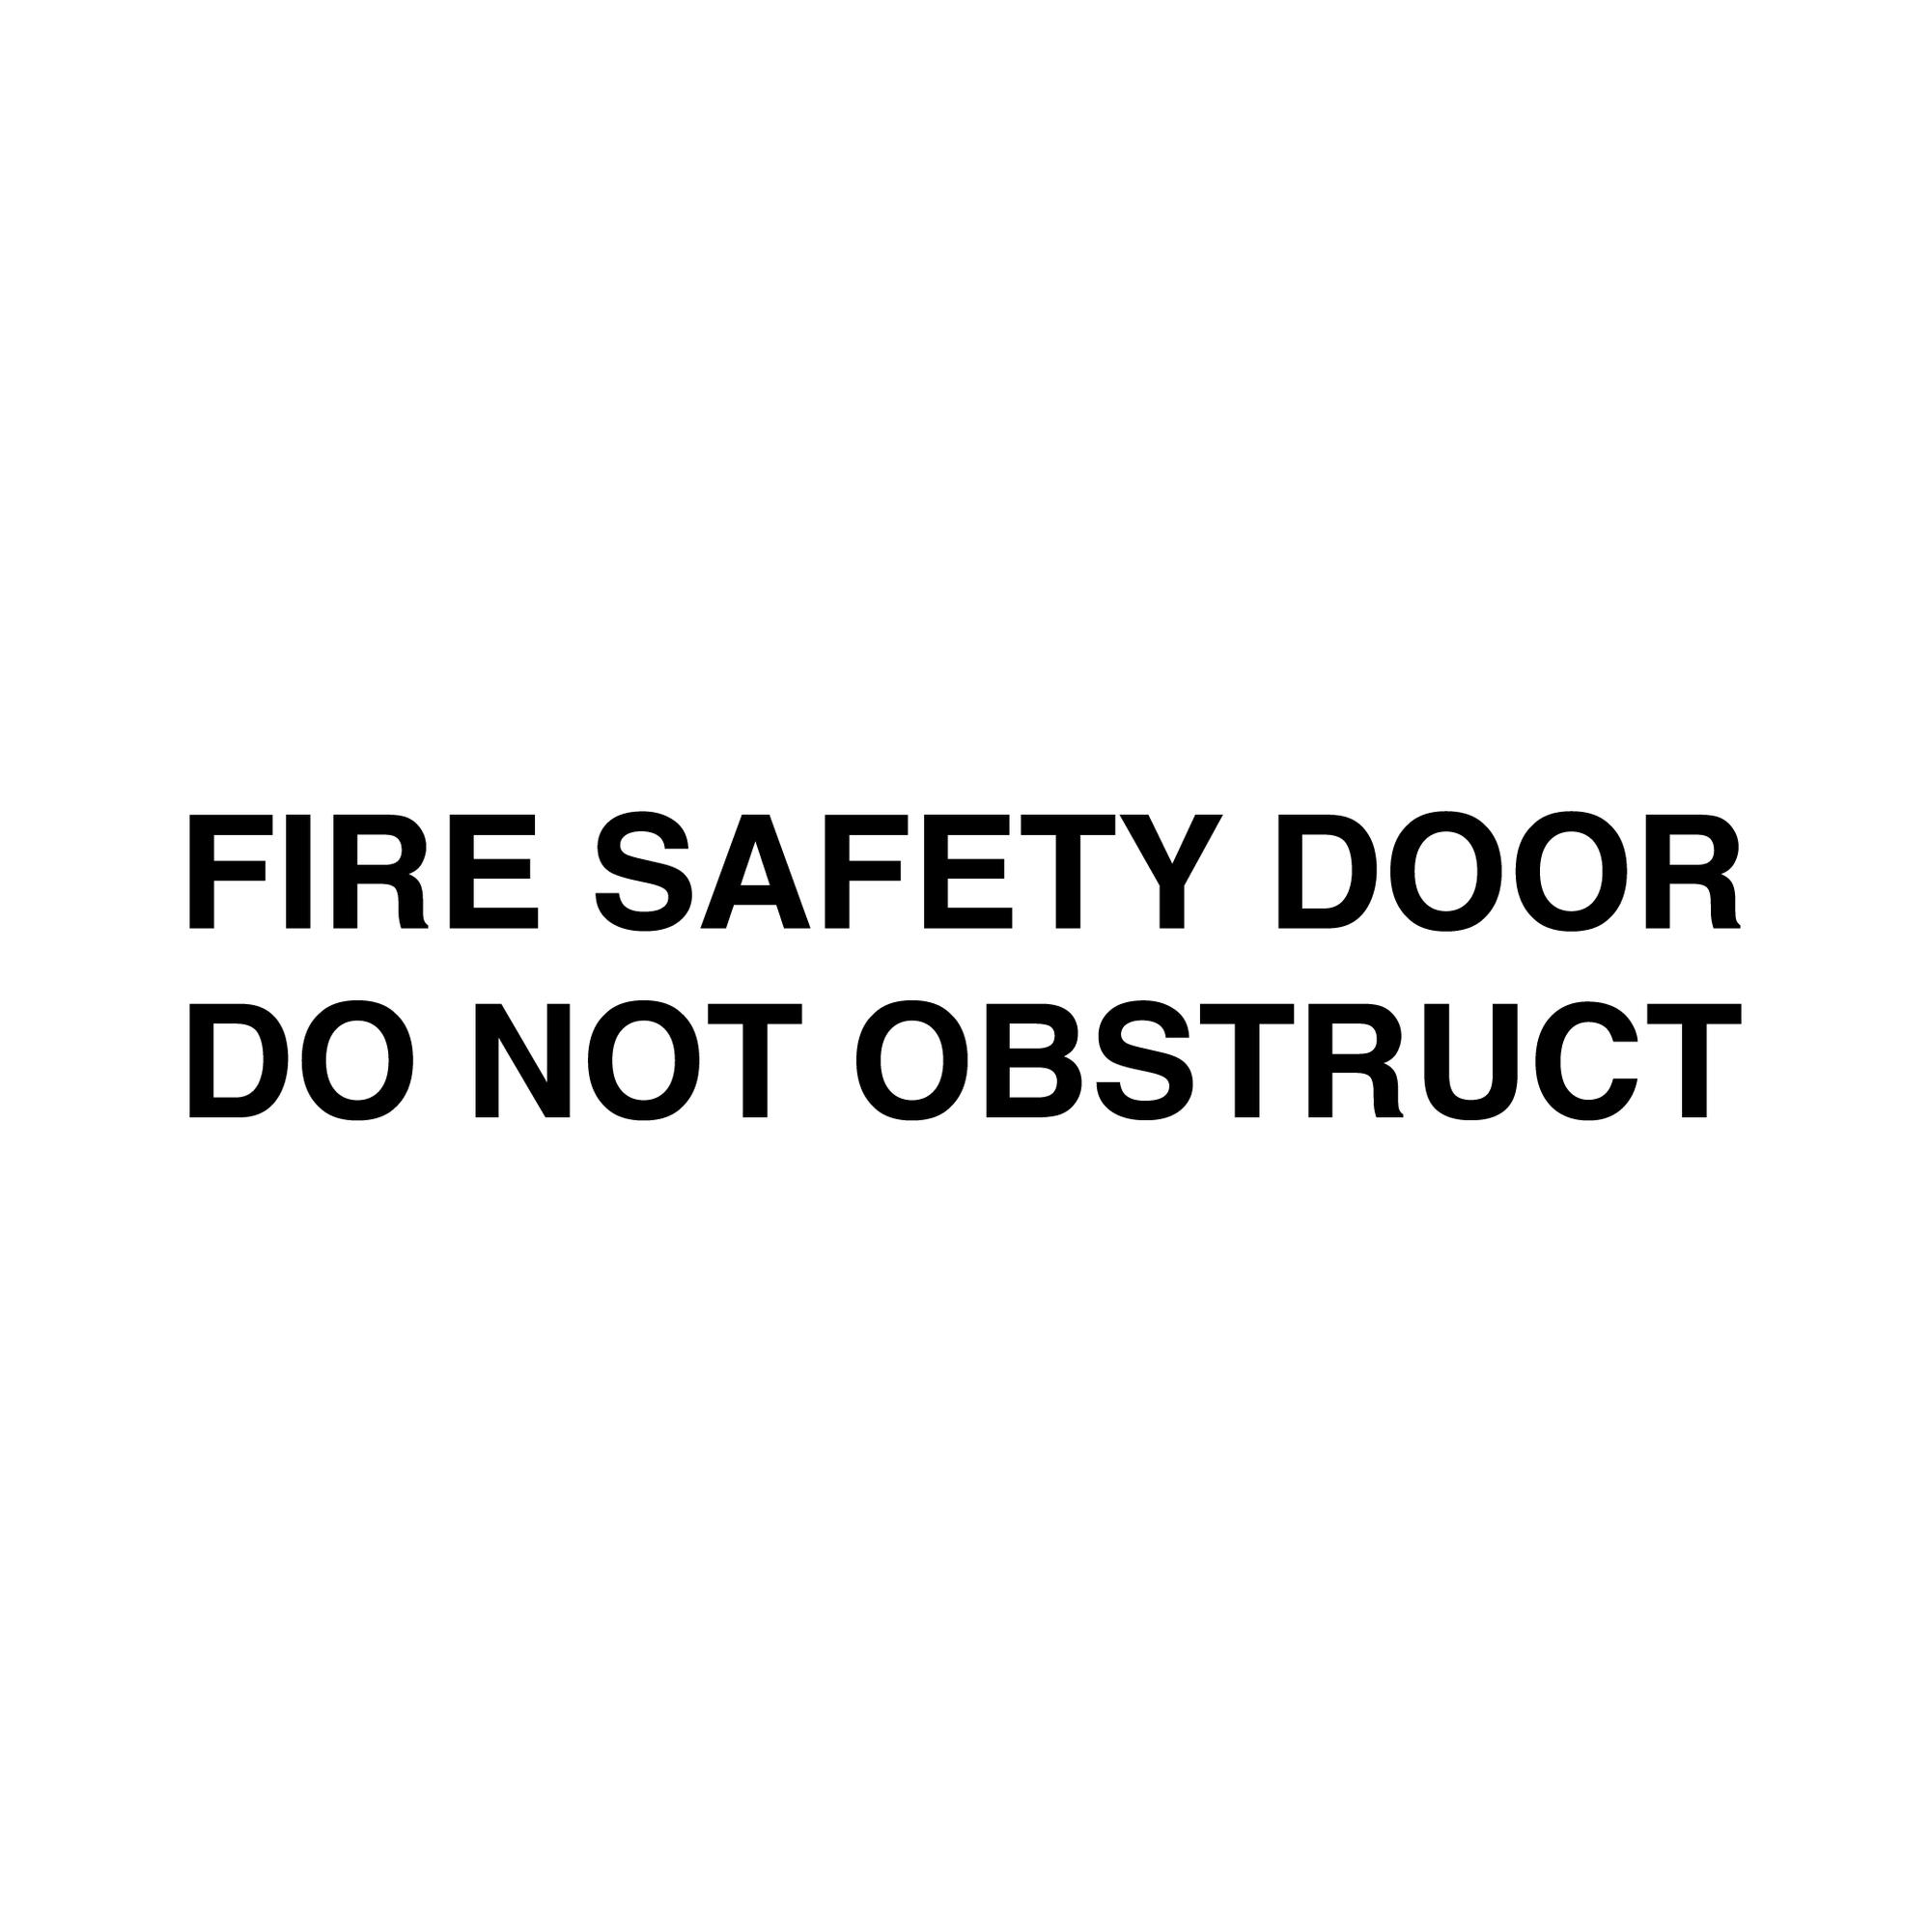 Fire Door Stickers - FIRE SAFETY DOOR, DO NOT OBSTRUCT